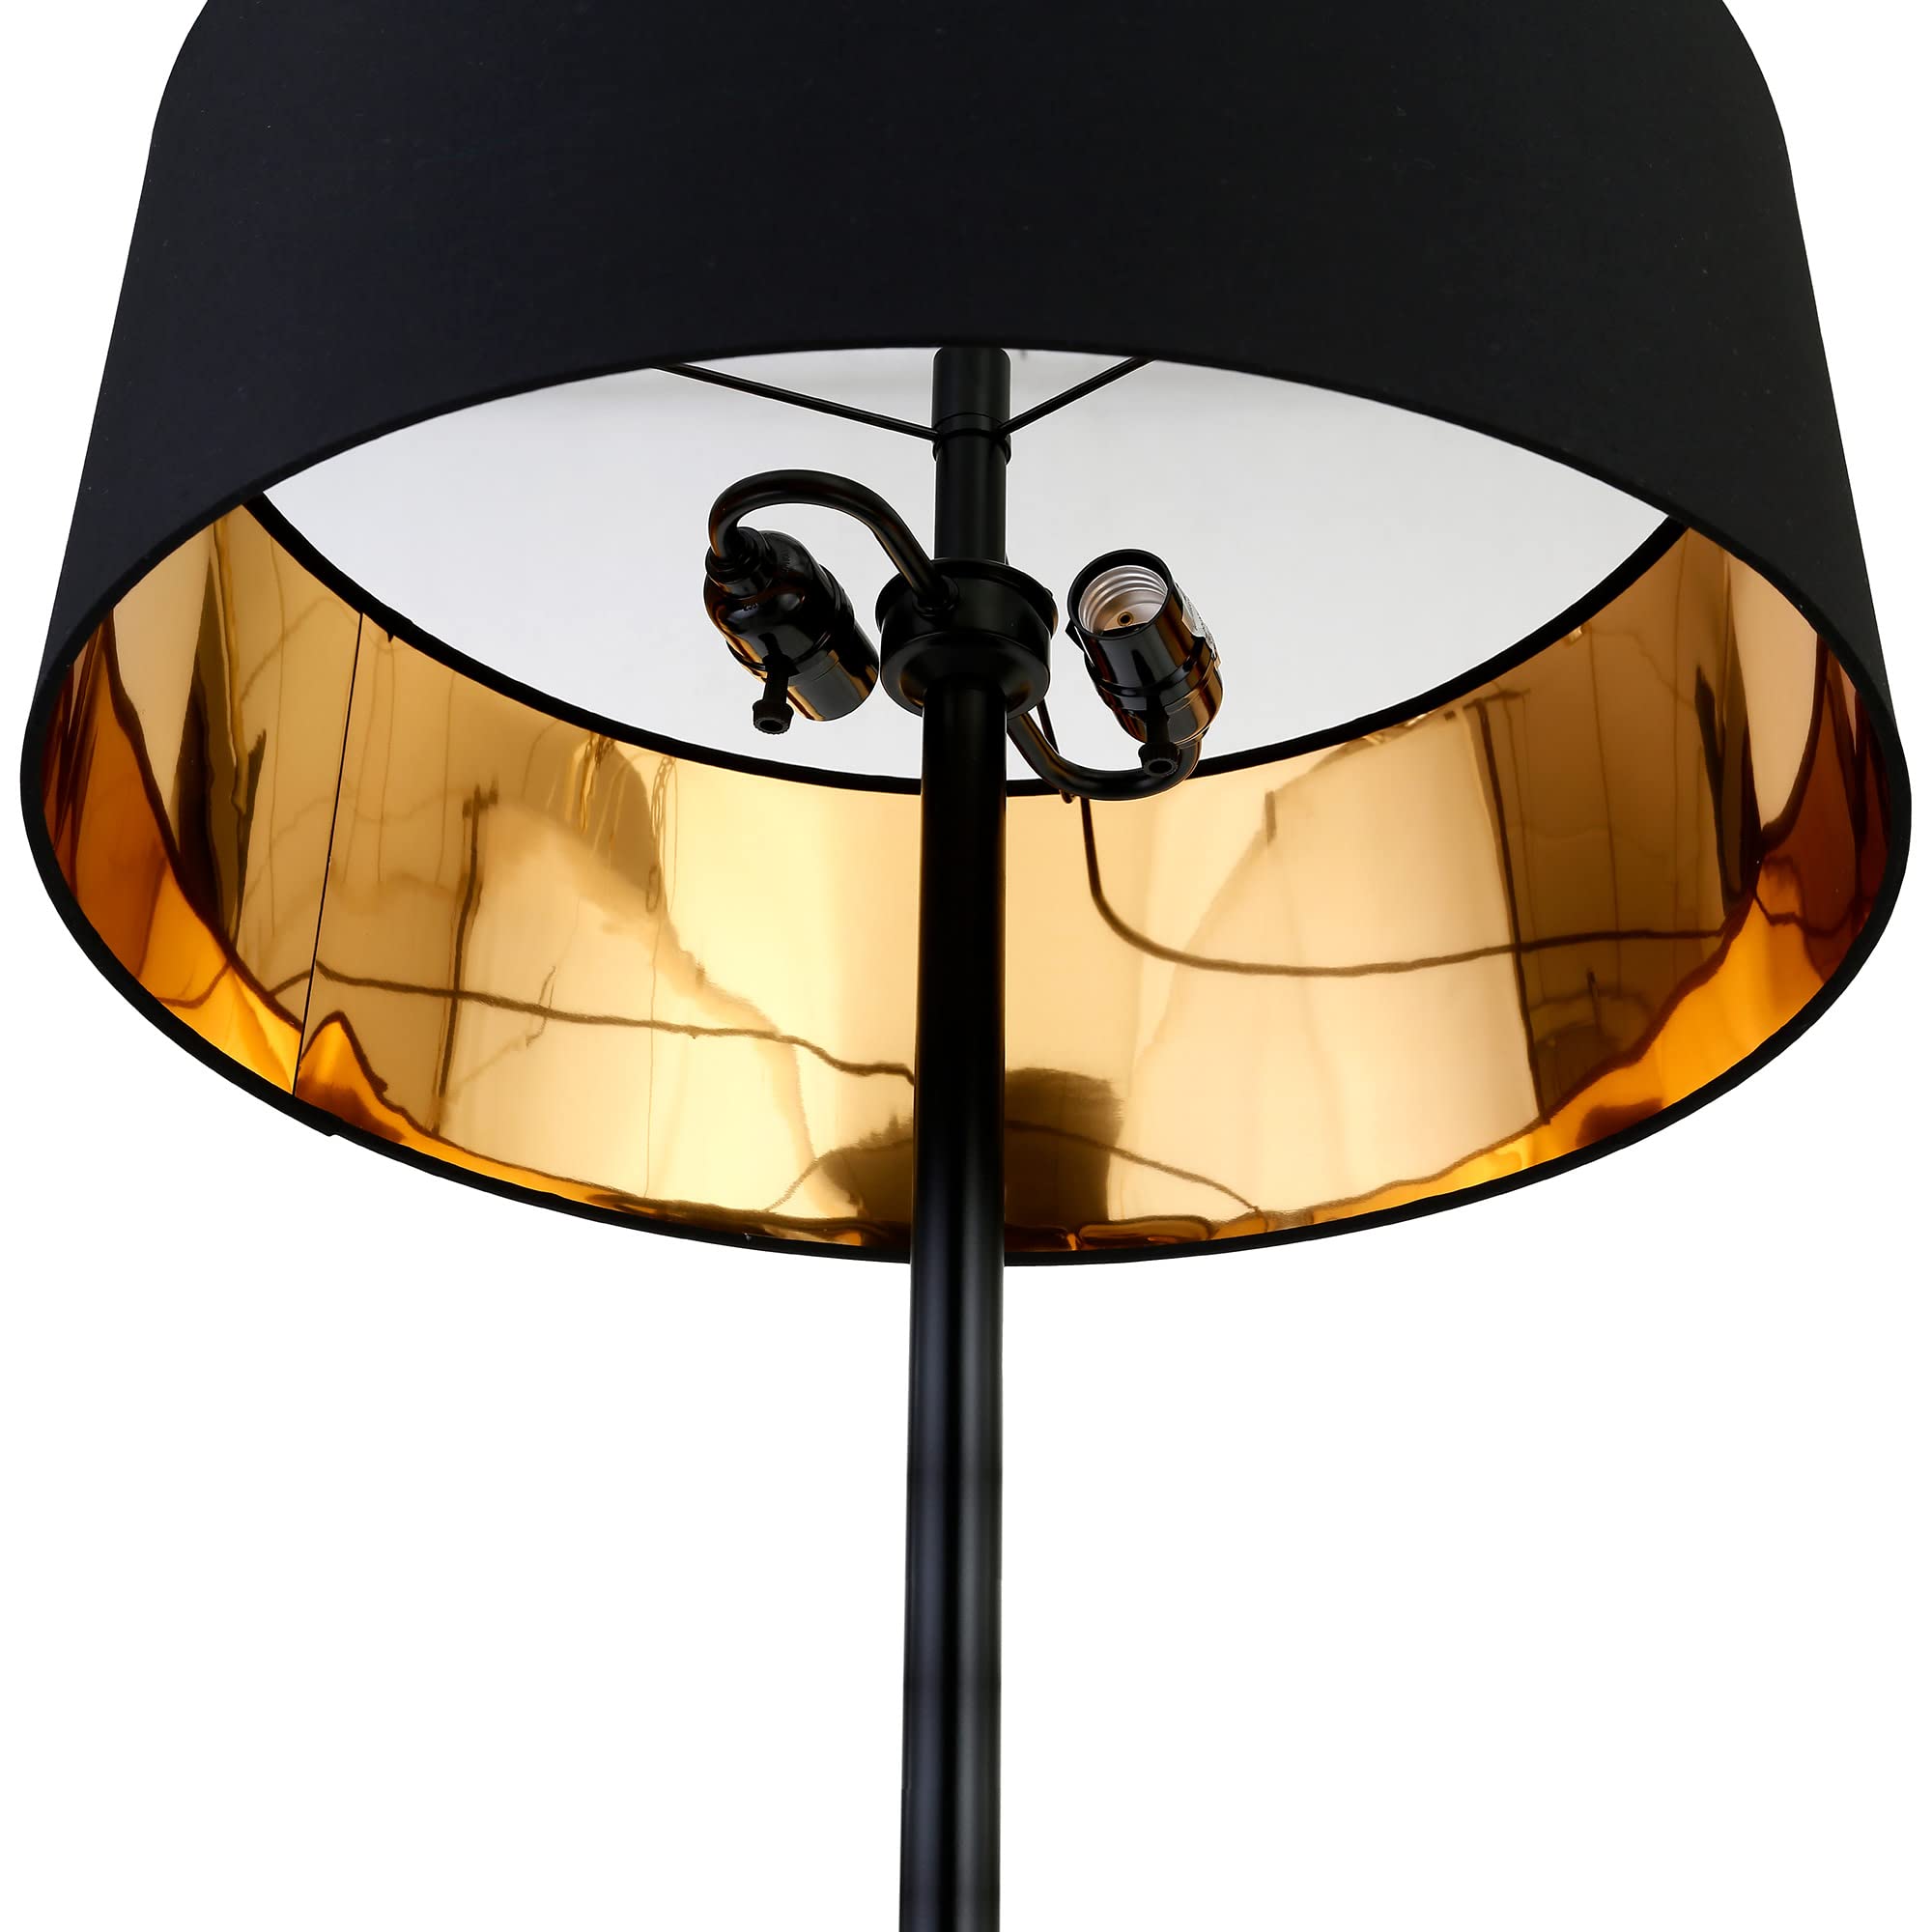 Henn&Hart Estella Two-Tone Floor Lamp with Fabric Shade in Matte Black/Brass/Black, 62" Tall